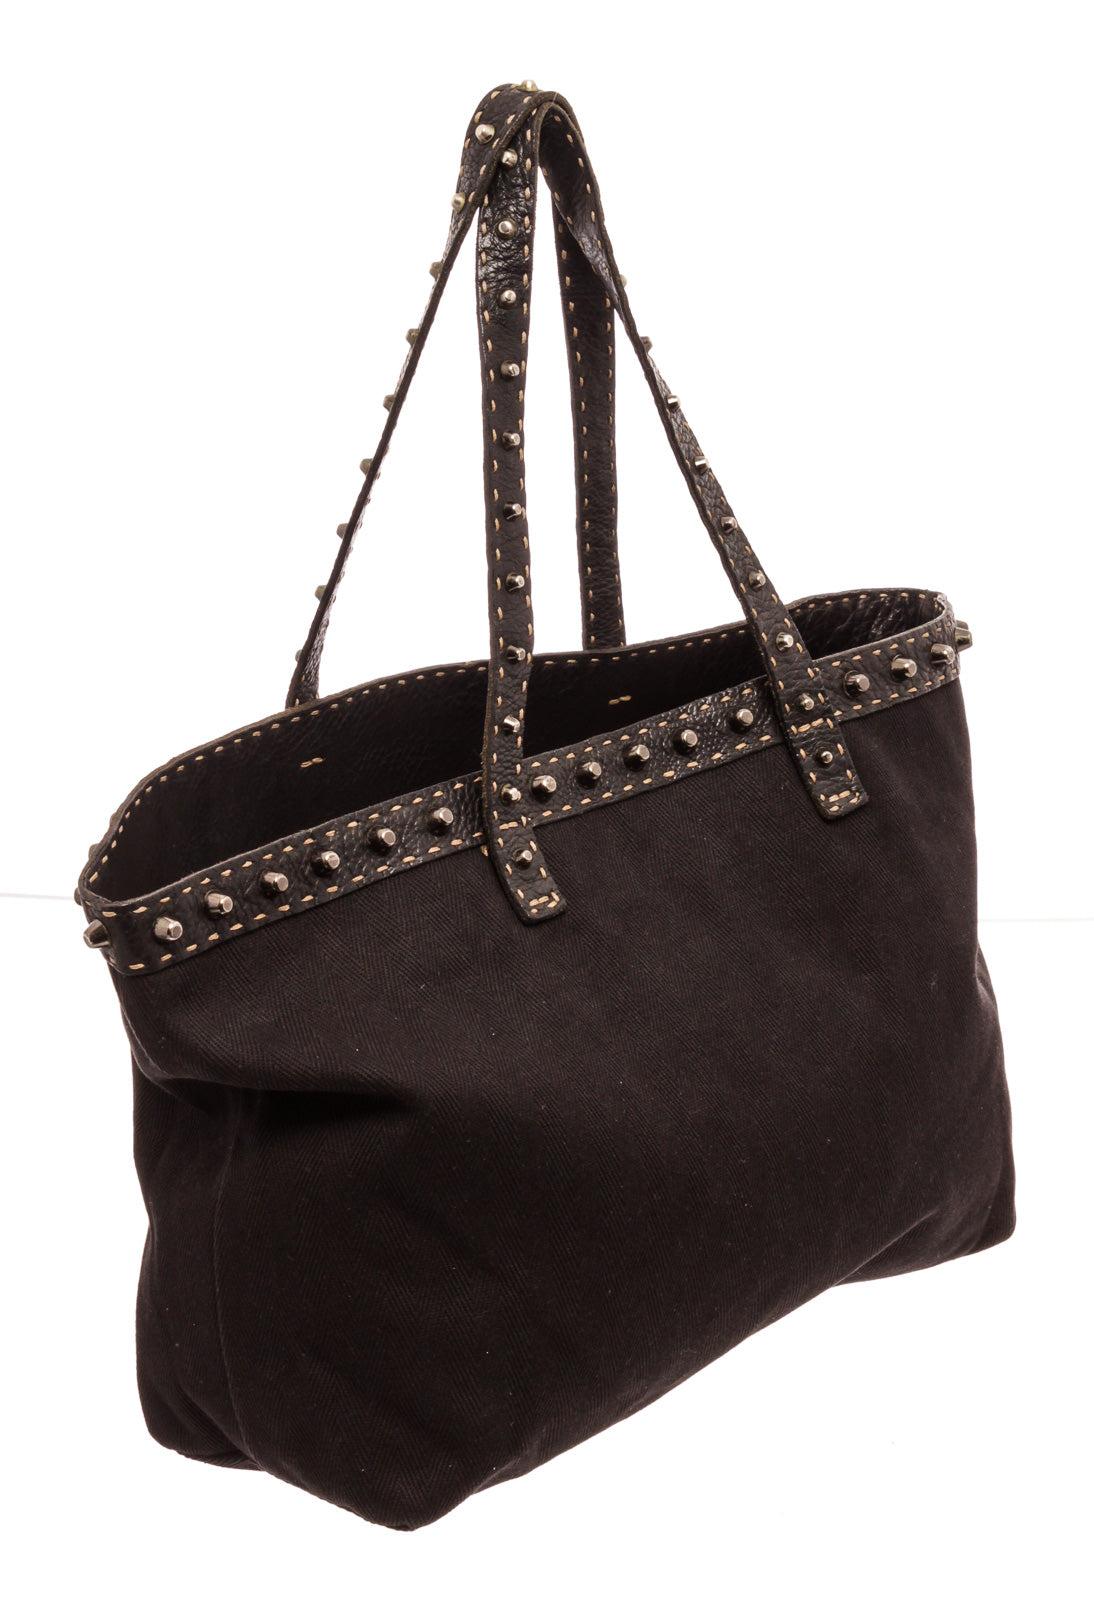 Fendi Black Canvas Selleria Tote Bag with gold-tone hardware, trim leather, interior zip pockets, shoulder strap and flap closure.
33085MSC